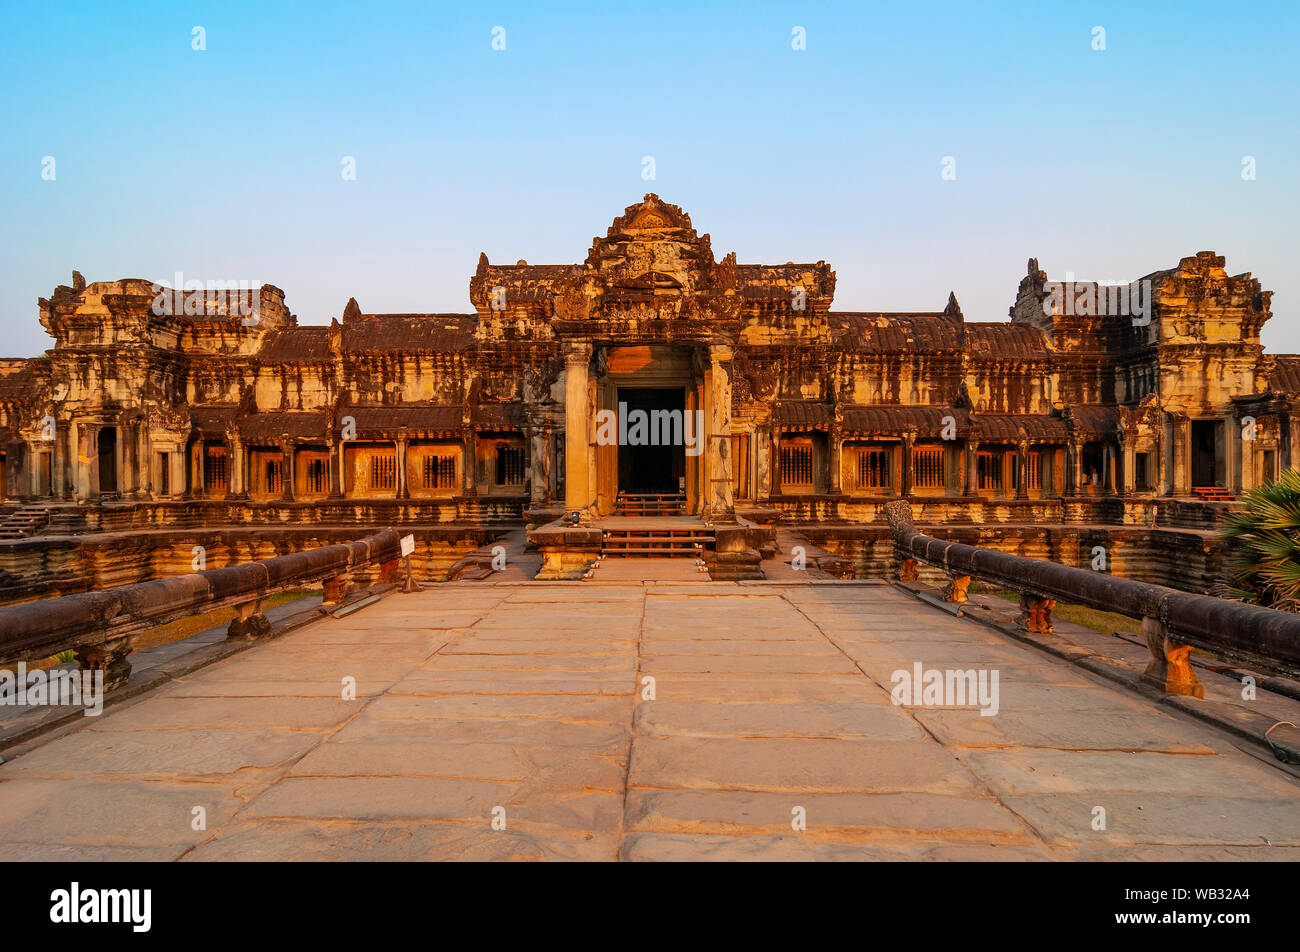 Entrance building of Angkor Wat at sunset, Siem Reap, Cambodia. Stock Photo